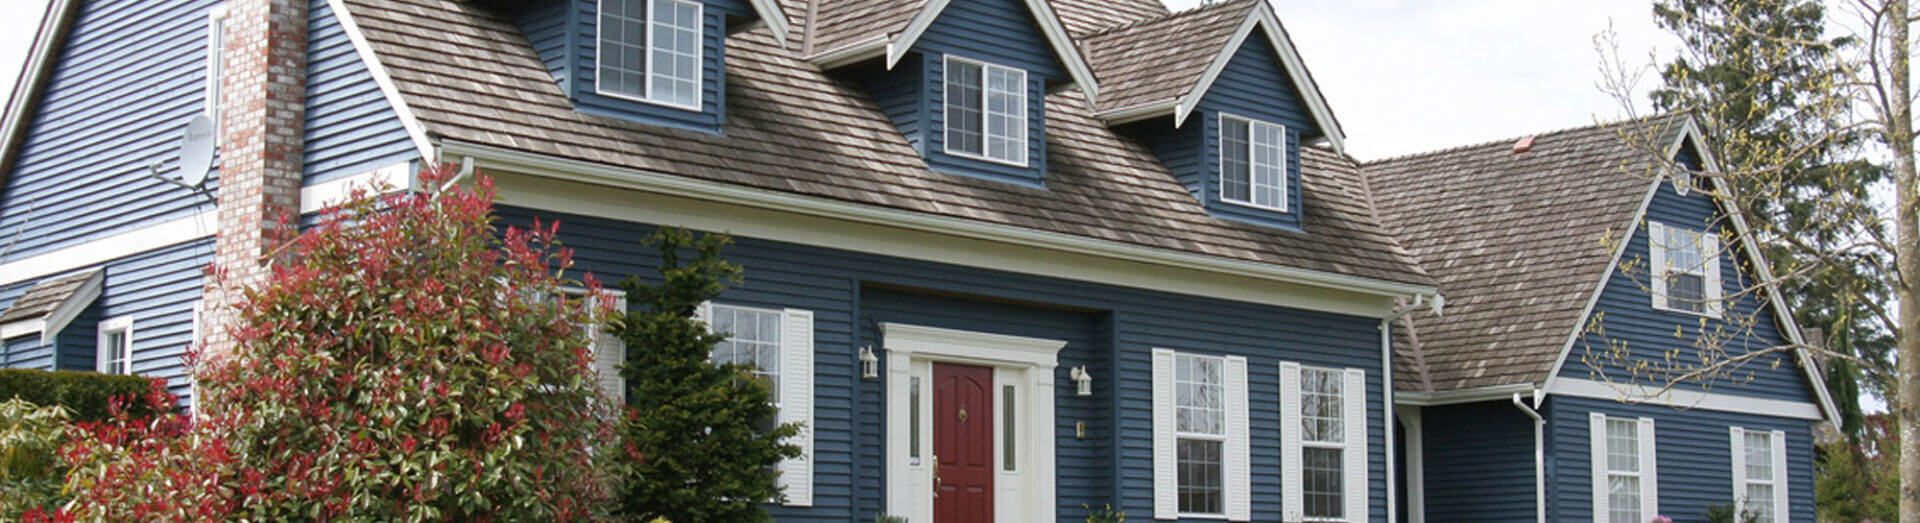 Blue House in suburban area in Michigan